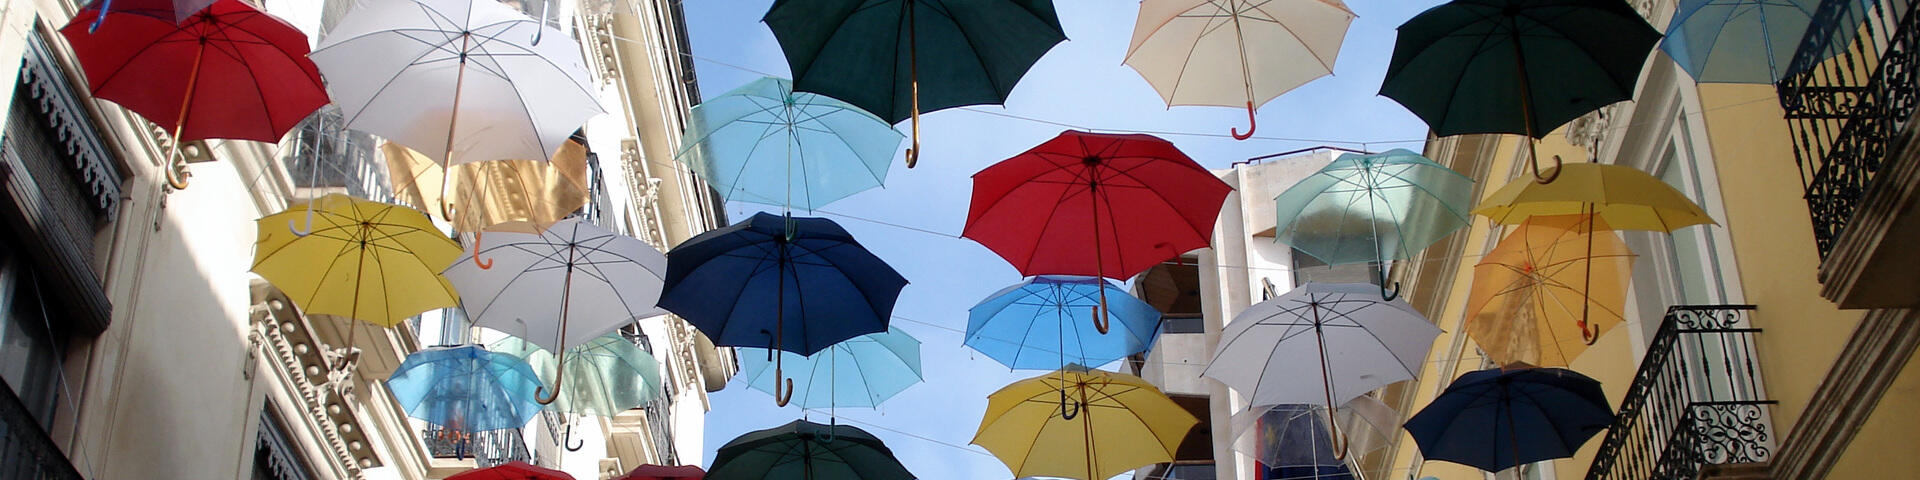 Umbrellas in the street, Alicante